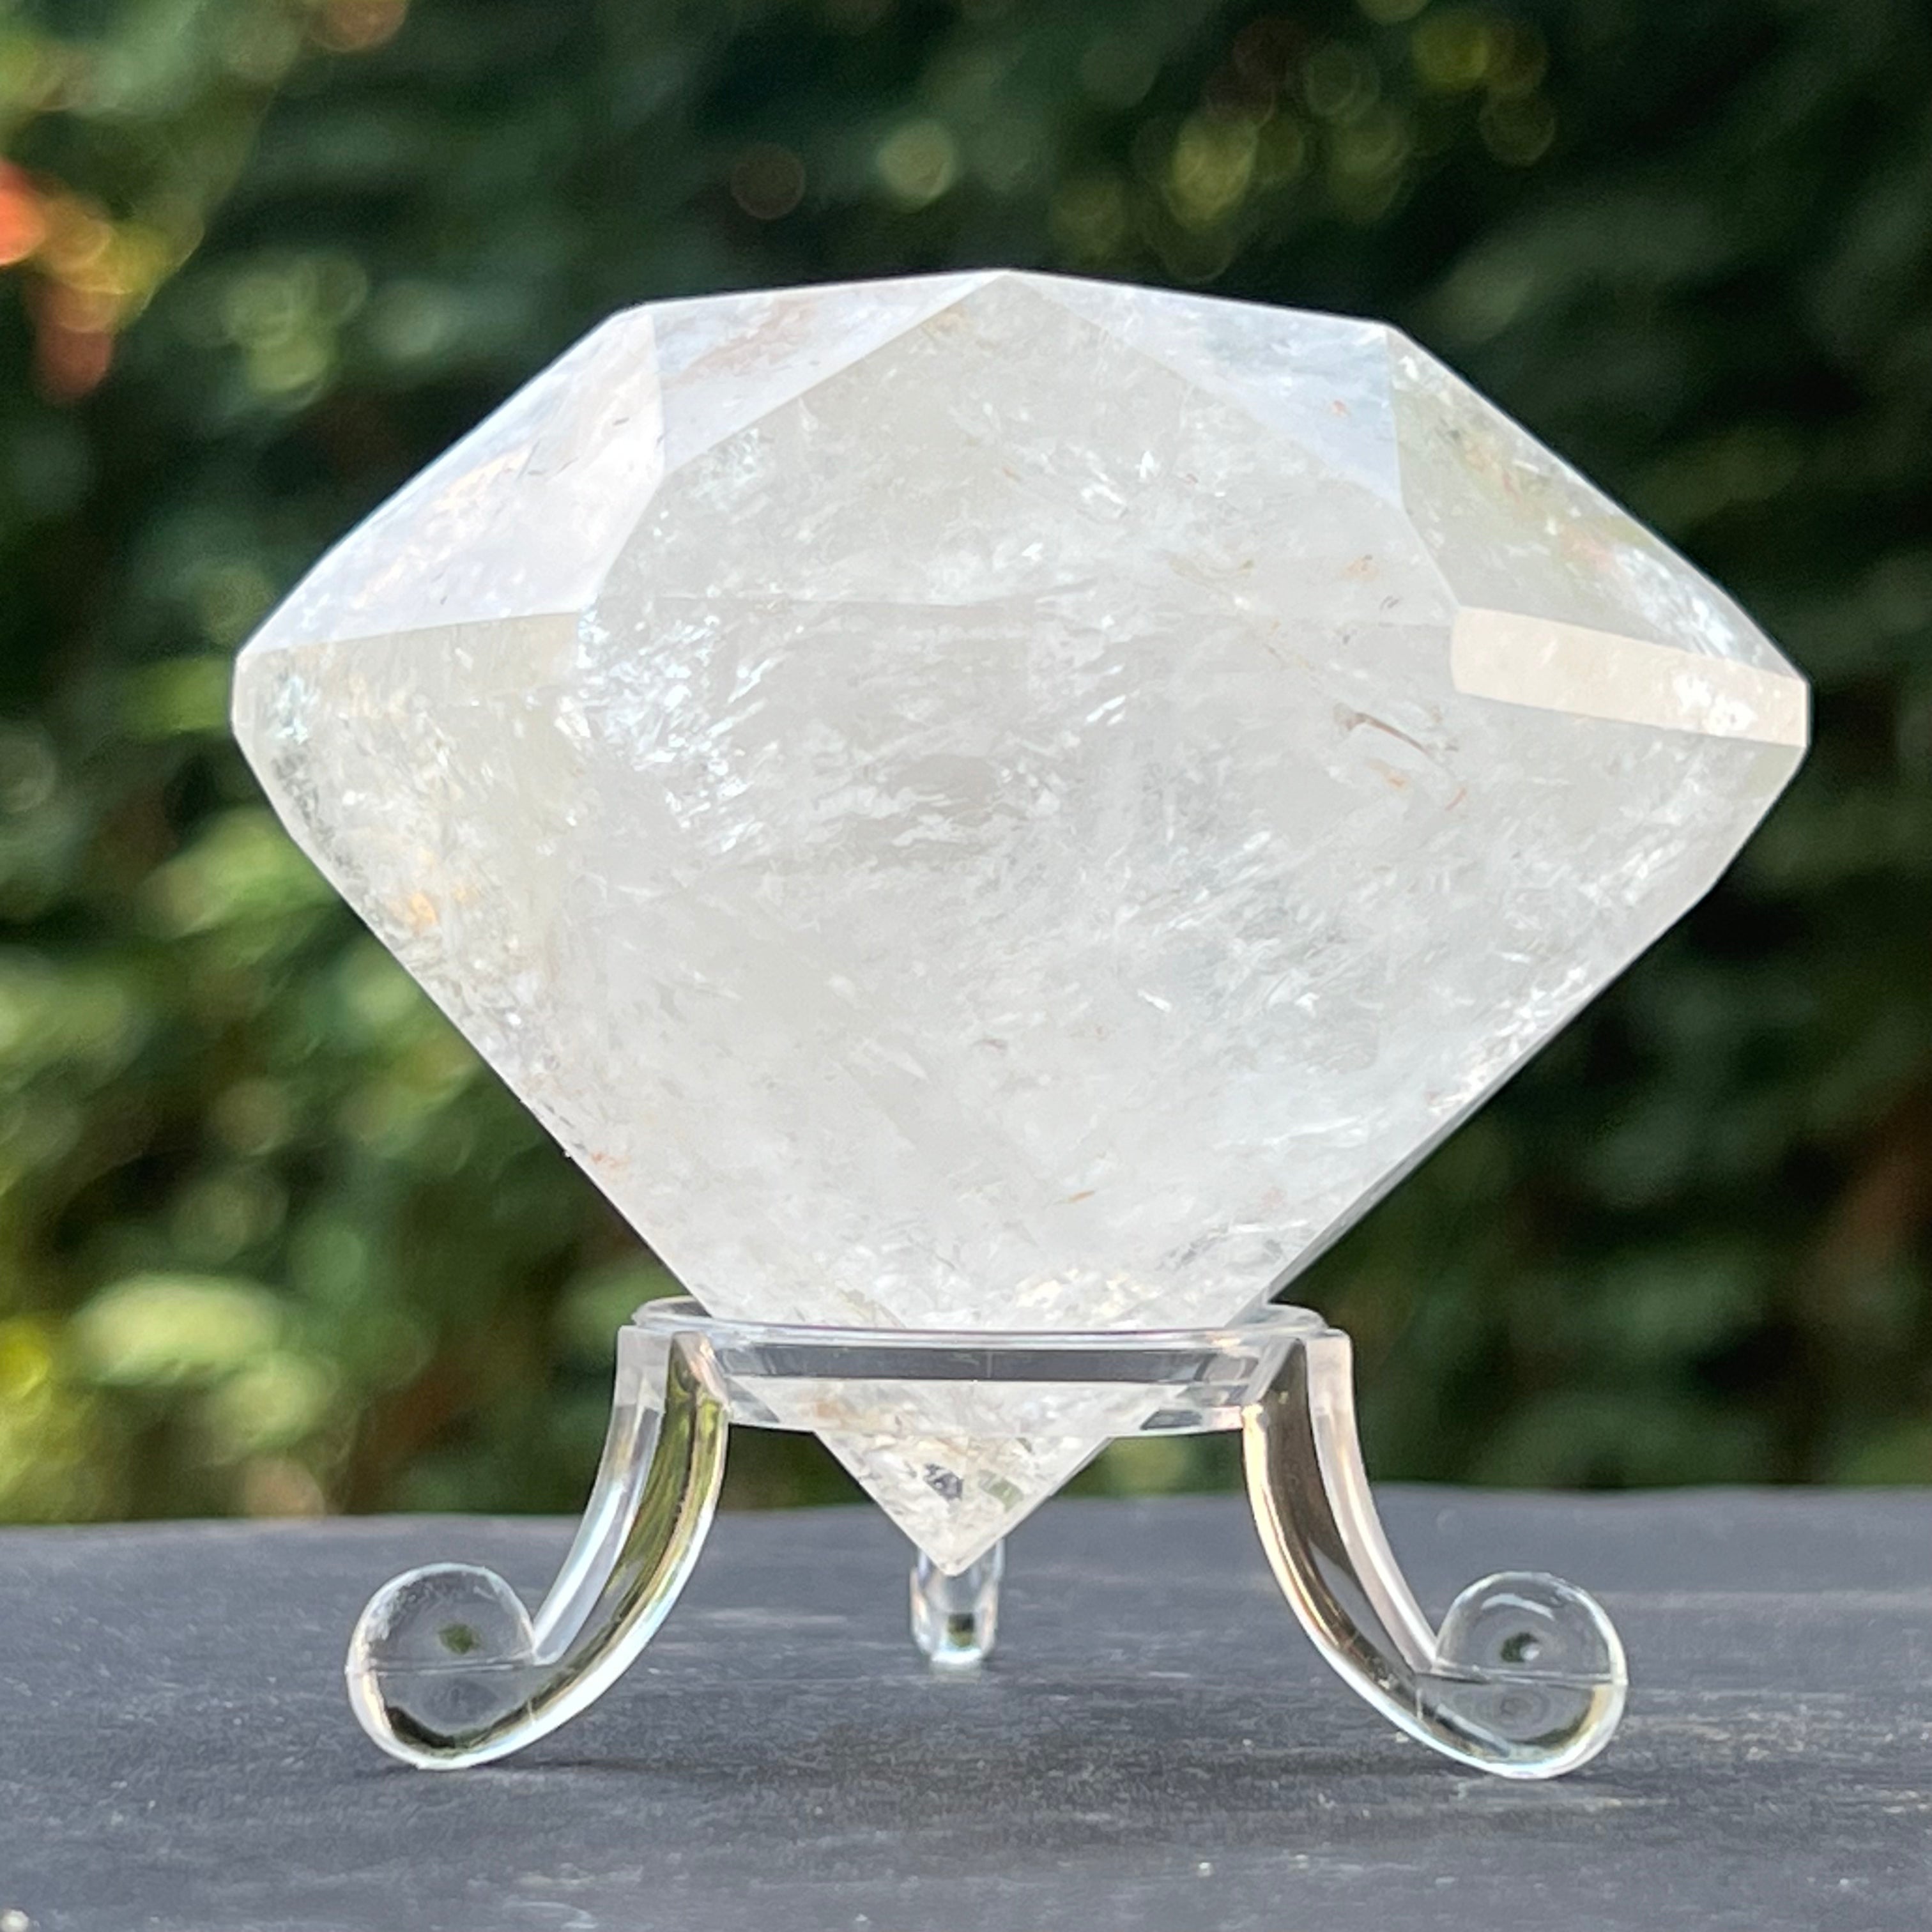 Cuart curcubeu forma diamant caliate extra, cristal de stanca/cuart incolor m5